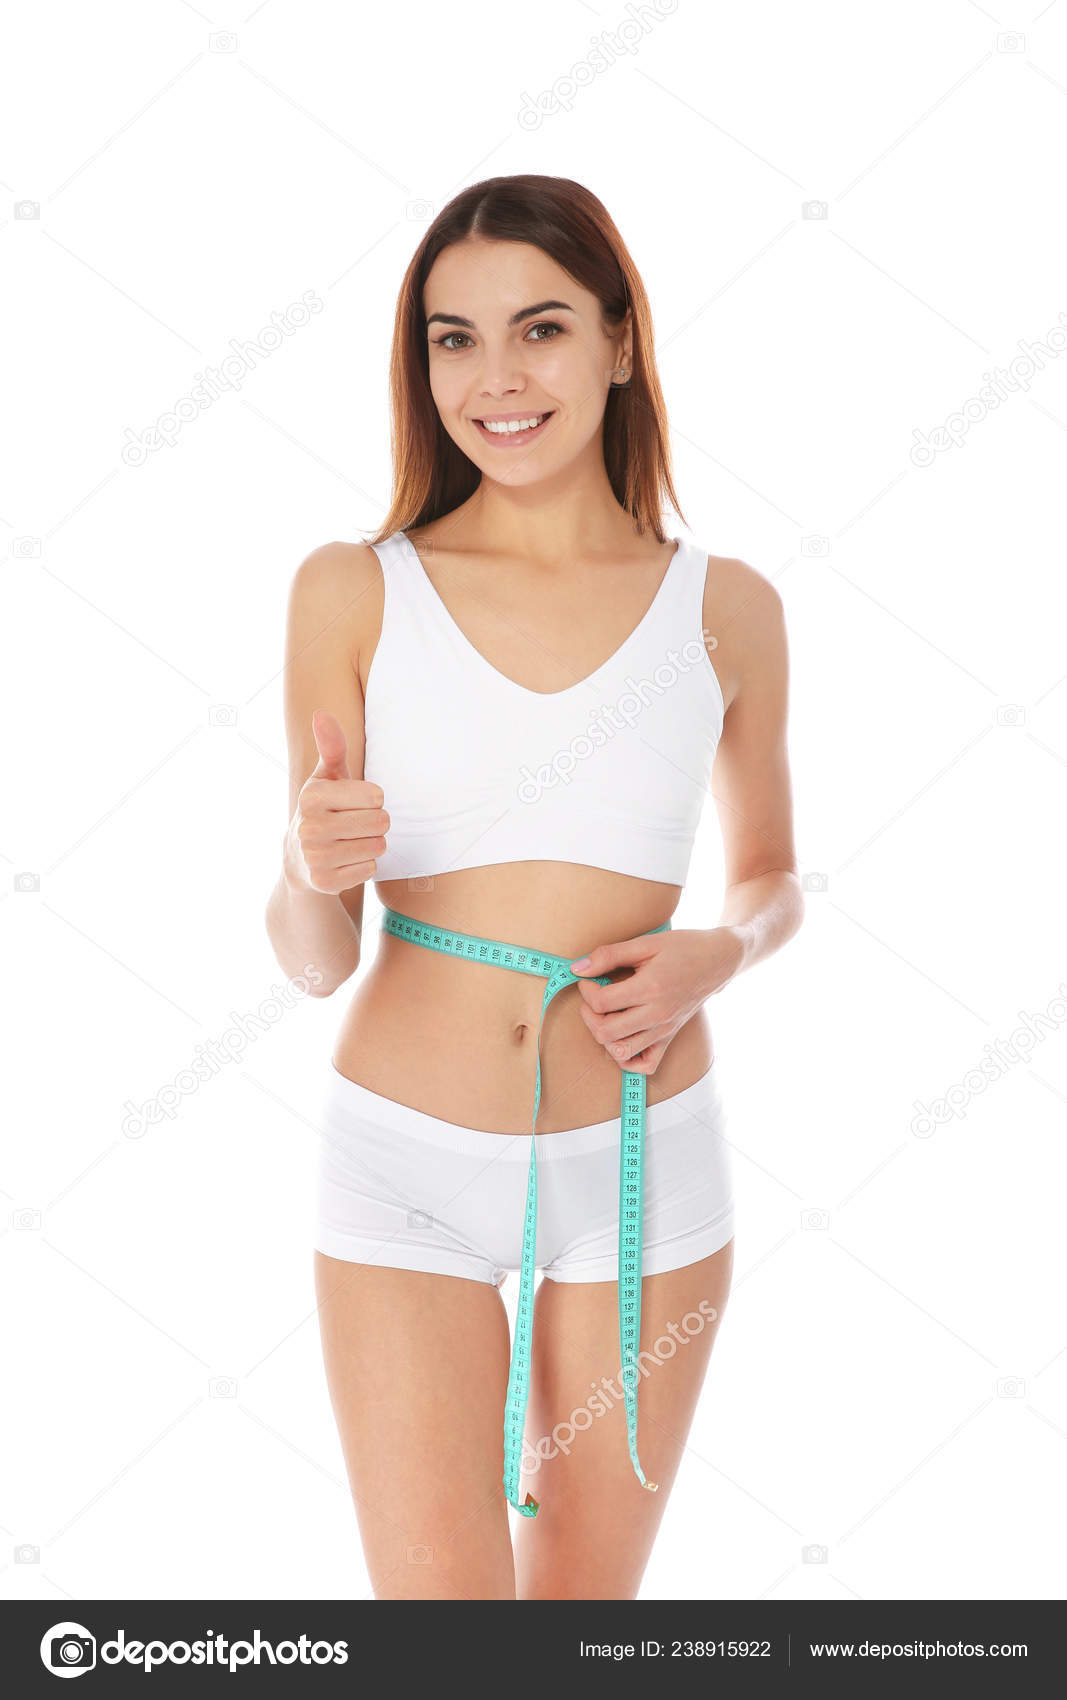 https://st4.depositphotos.com/16122460/23891/i/1600/depositphotos_238915922-stock-photo-slim-woman-measuring-her-waist.jpg